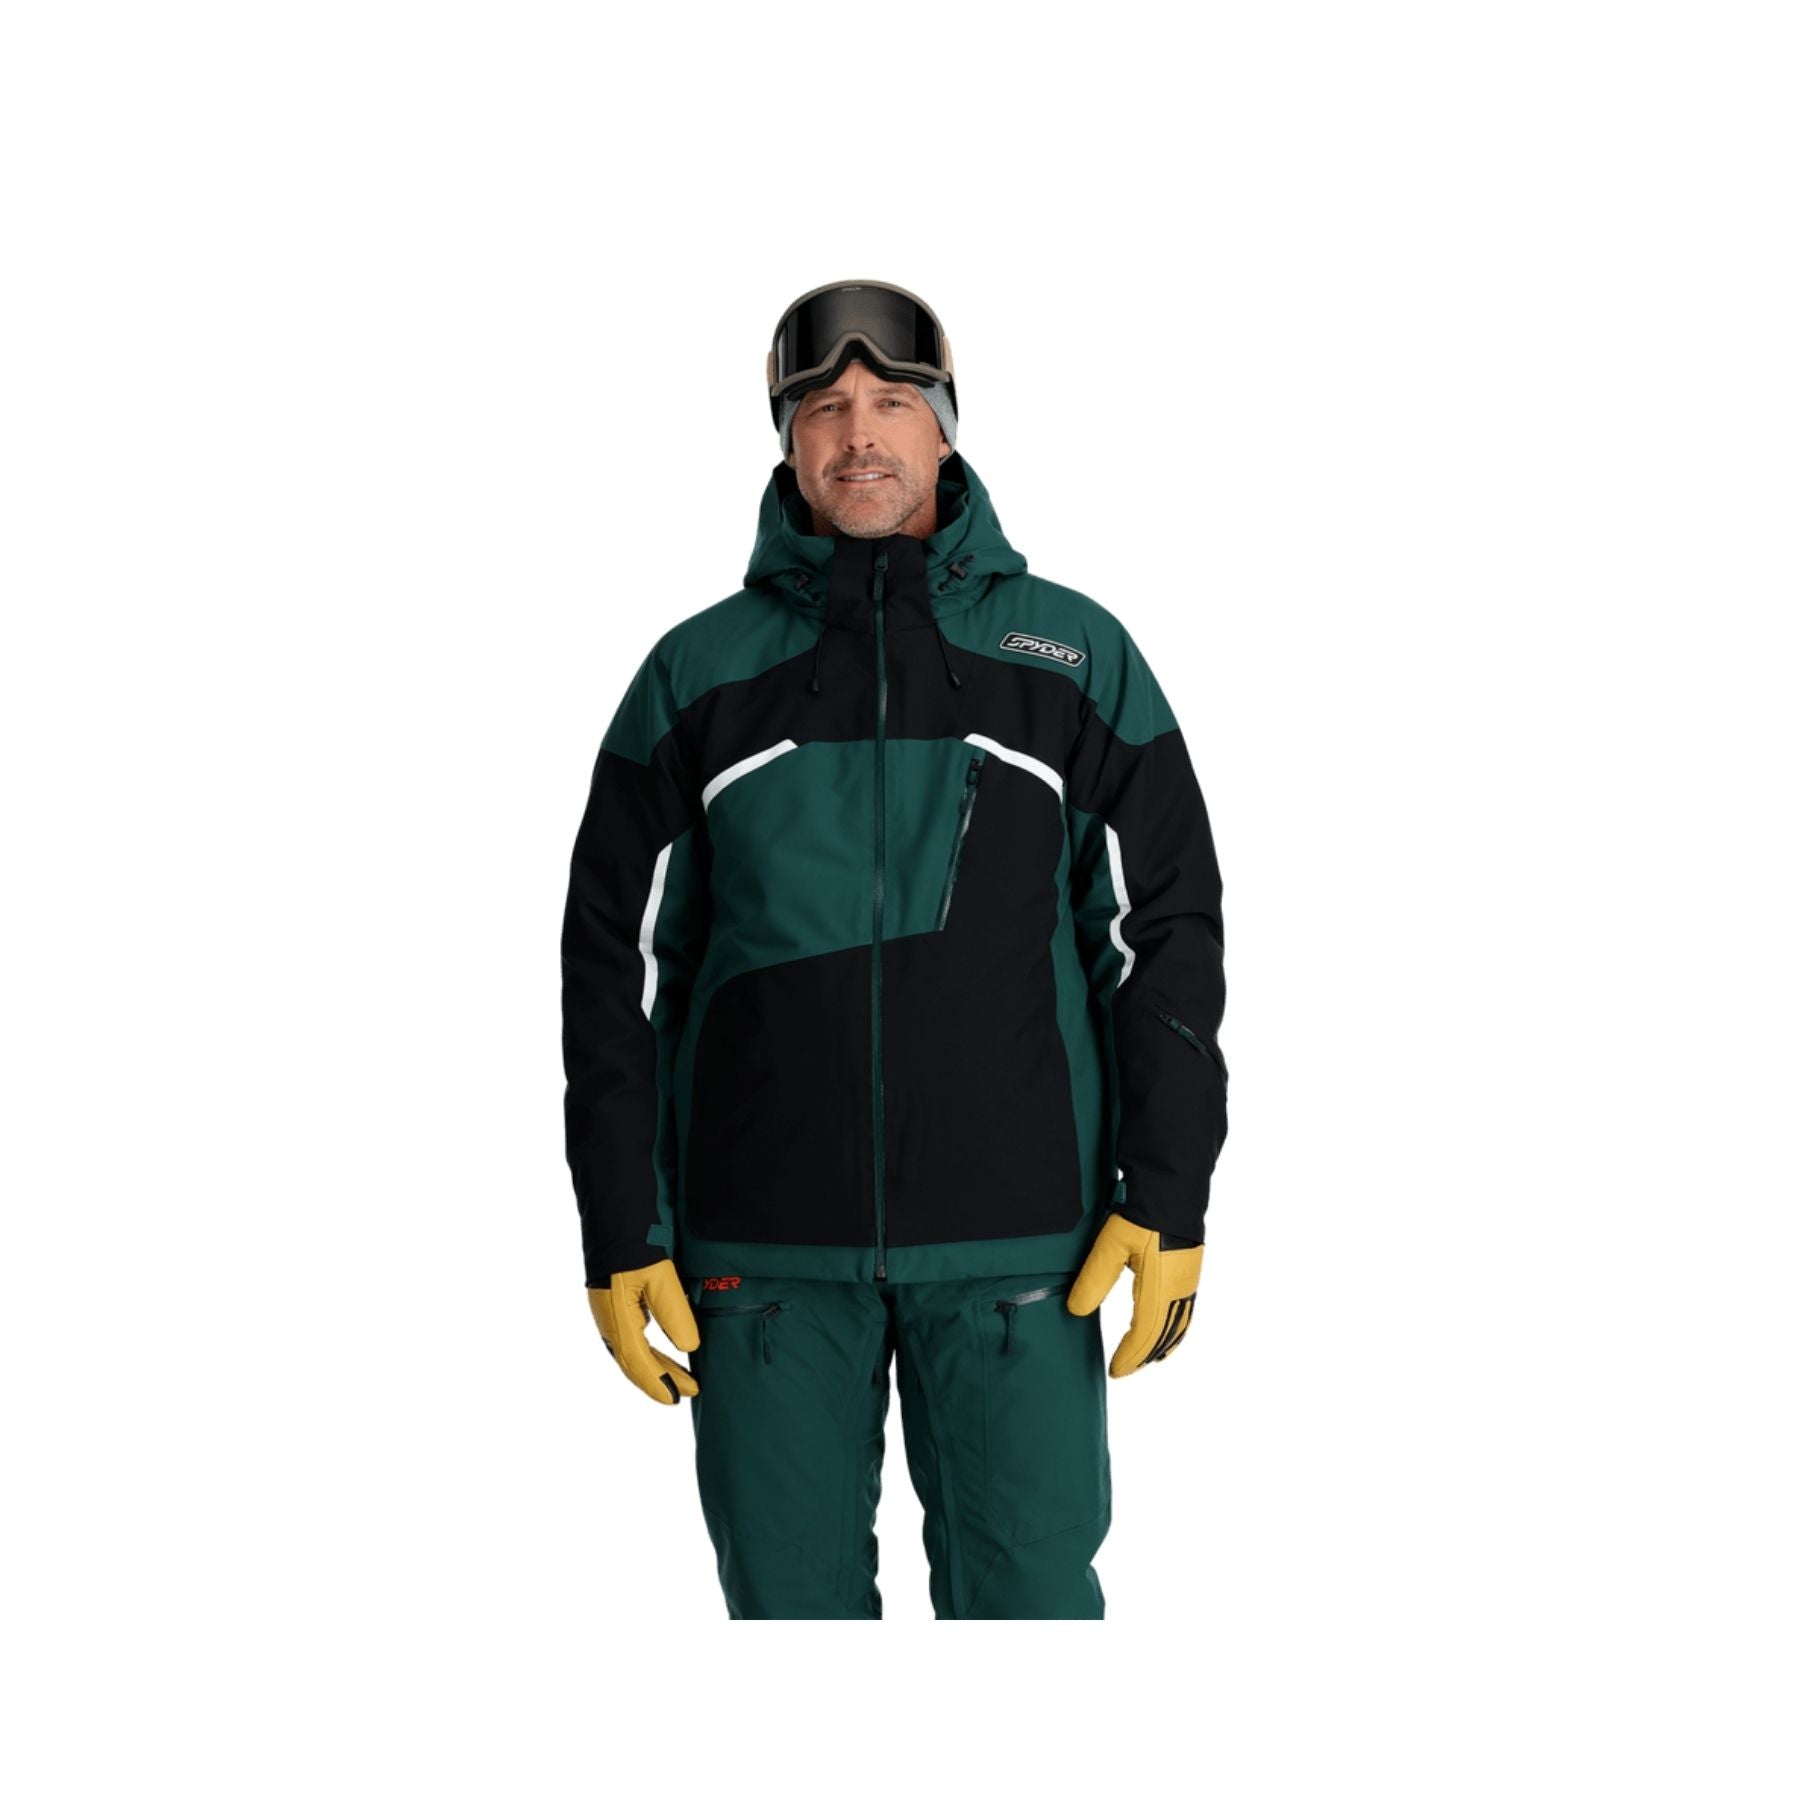 Spyder Leader Jacket in Cypress Green